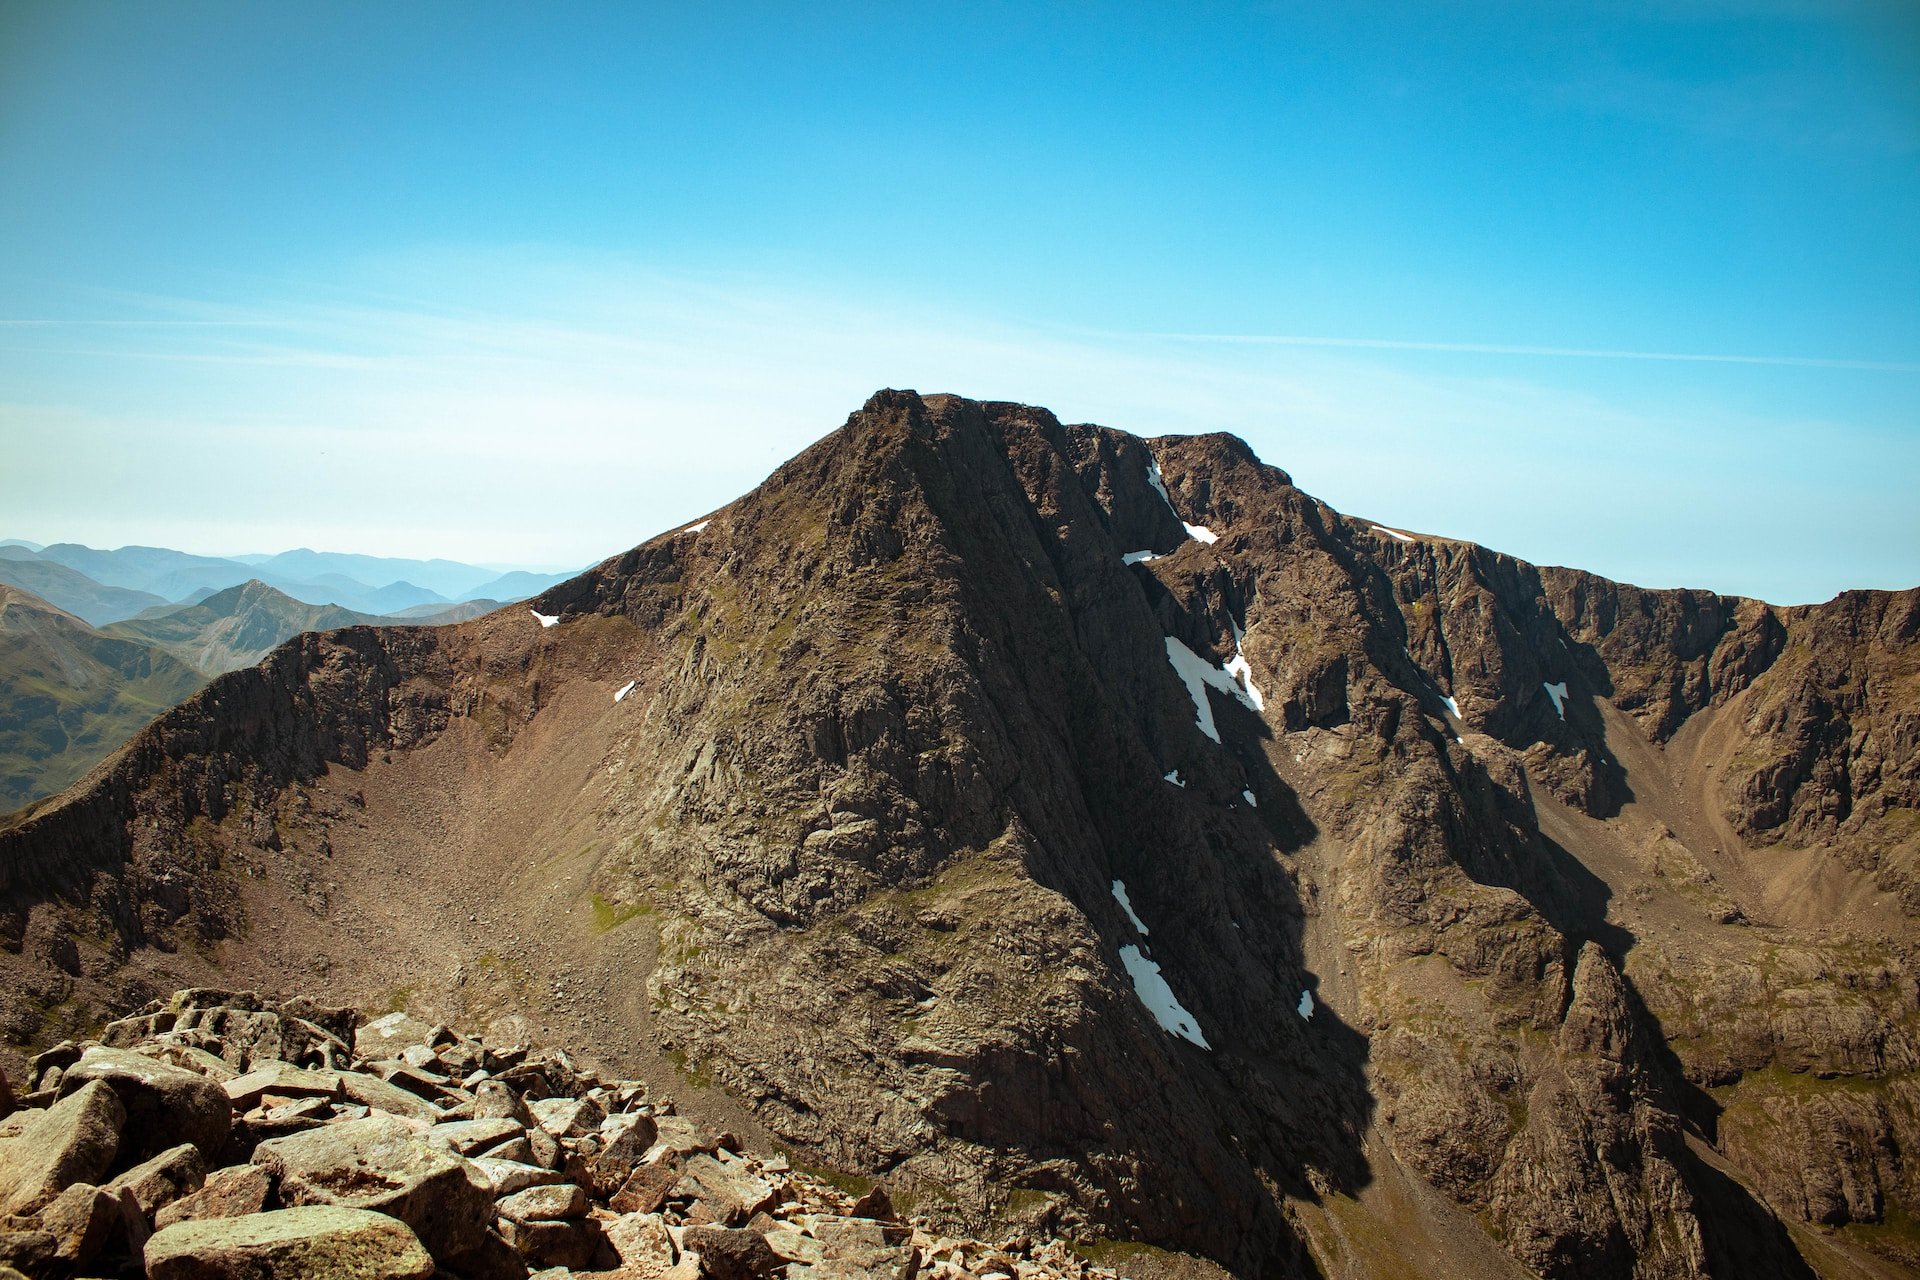 Ben Nevis mountain in Scotland (photo: Jack Skinner)